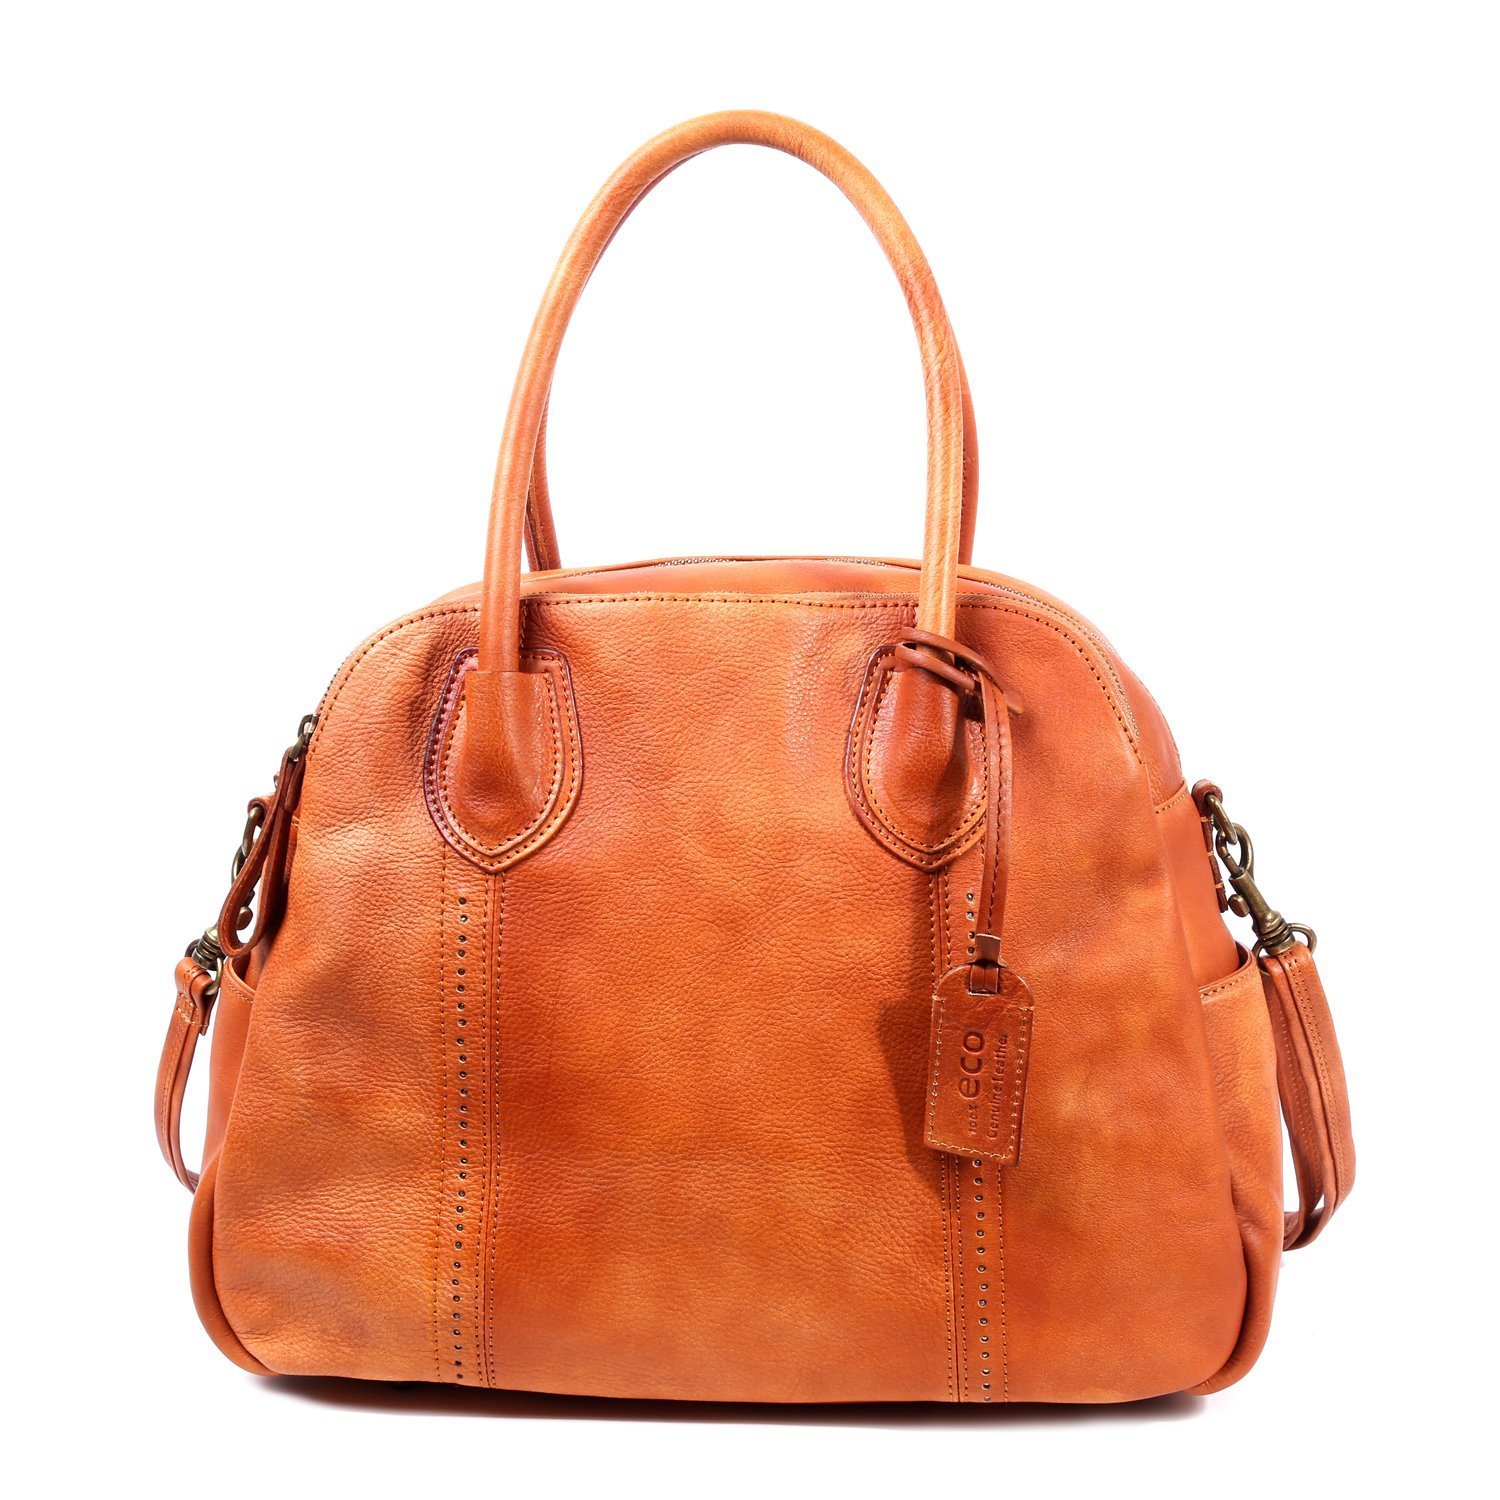 OLD TREND Vintage Leather Hobo bag - Handbags & Purses